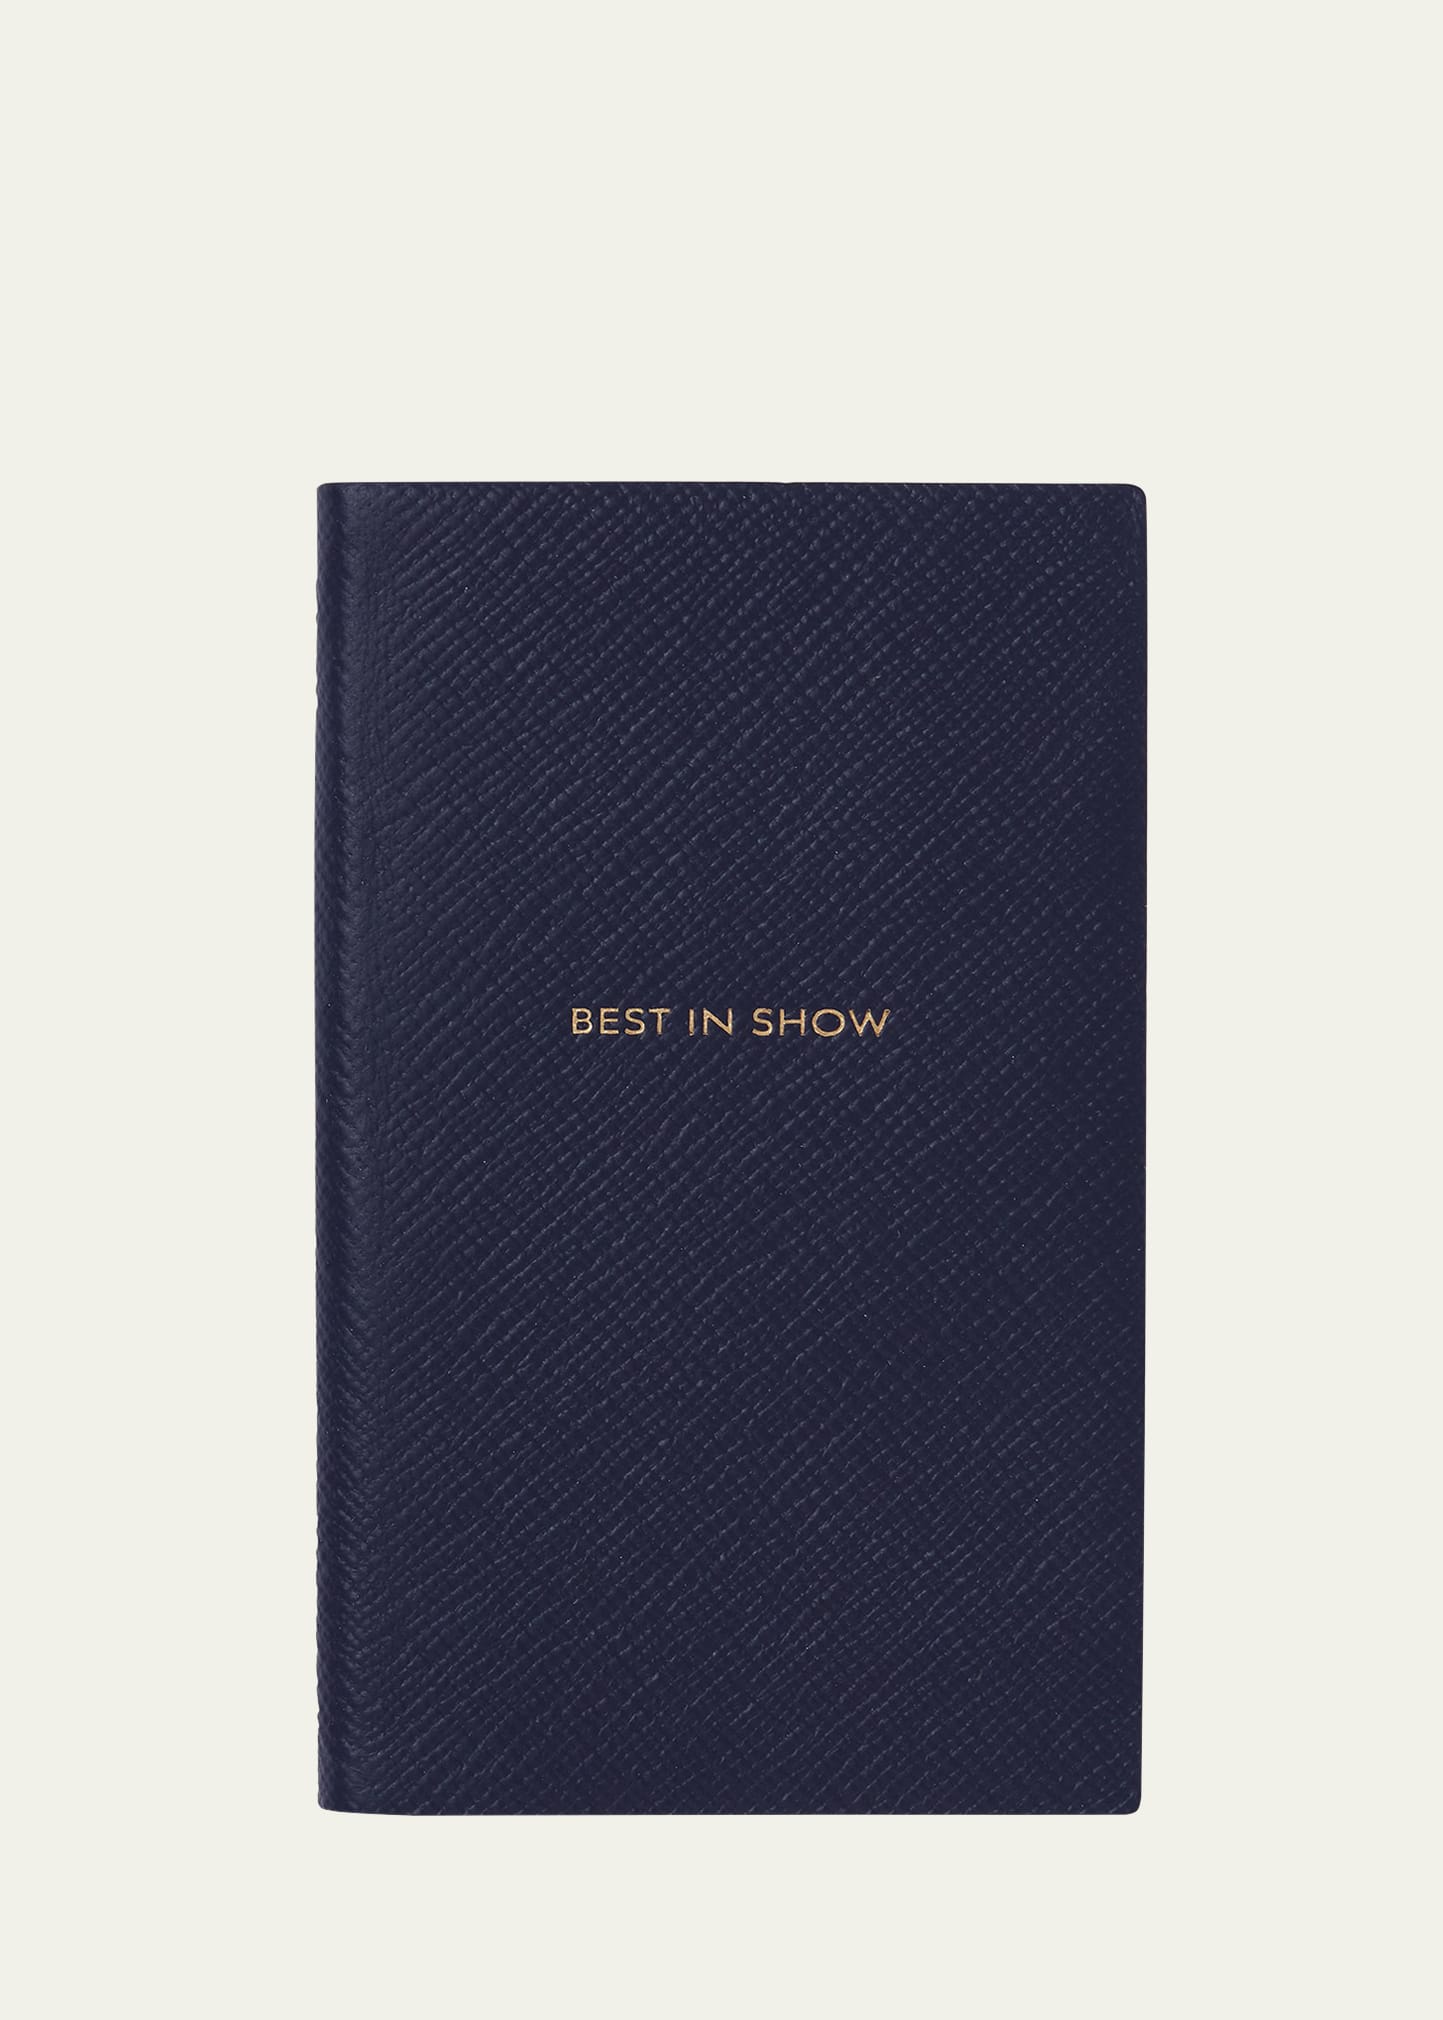 "Best in Show" Cross-Grain Leather Notebook